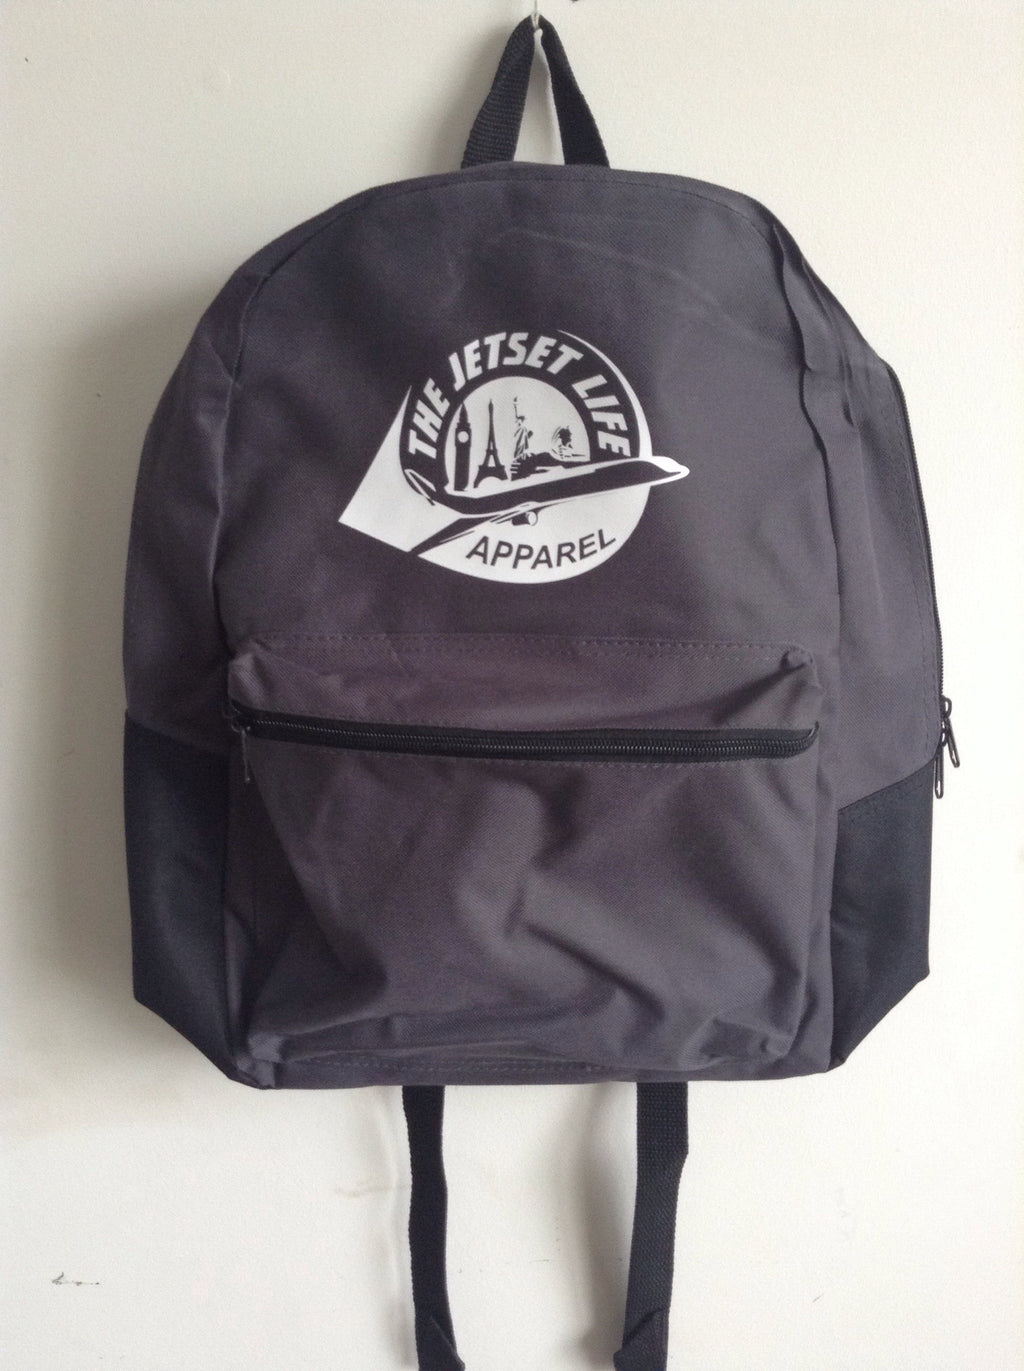 Grey and Black Jetset Life Apparel Backpacks